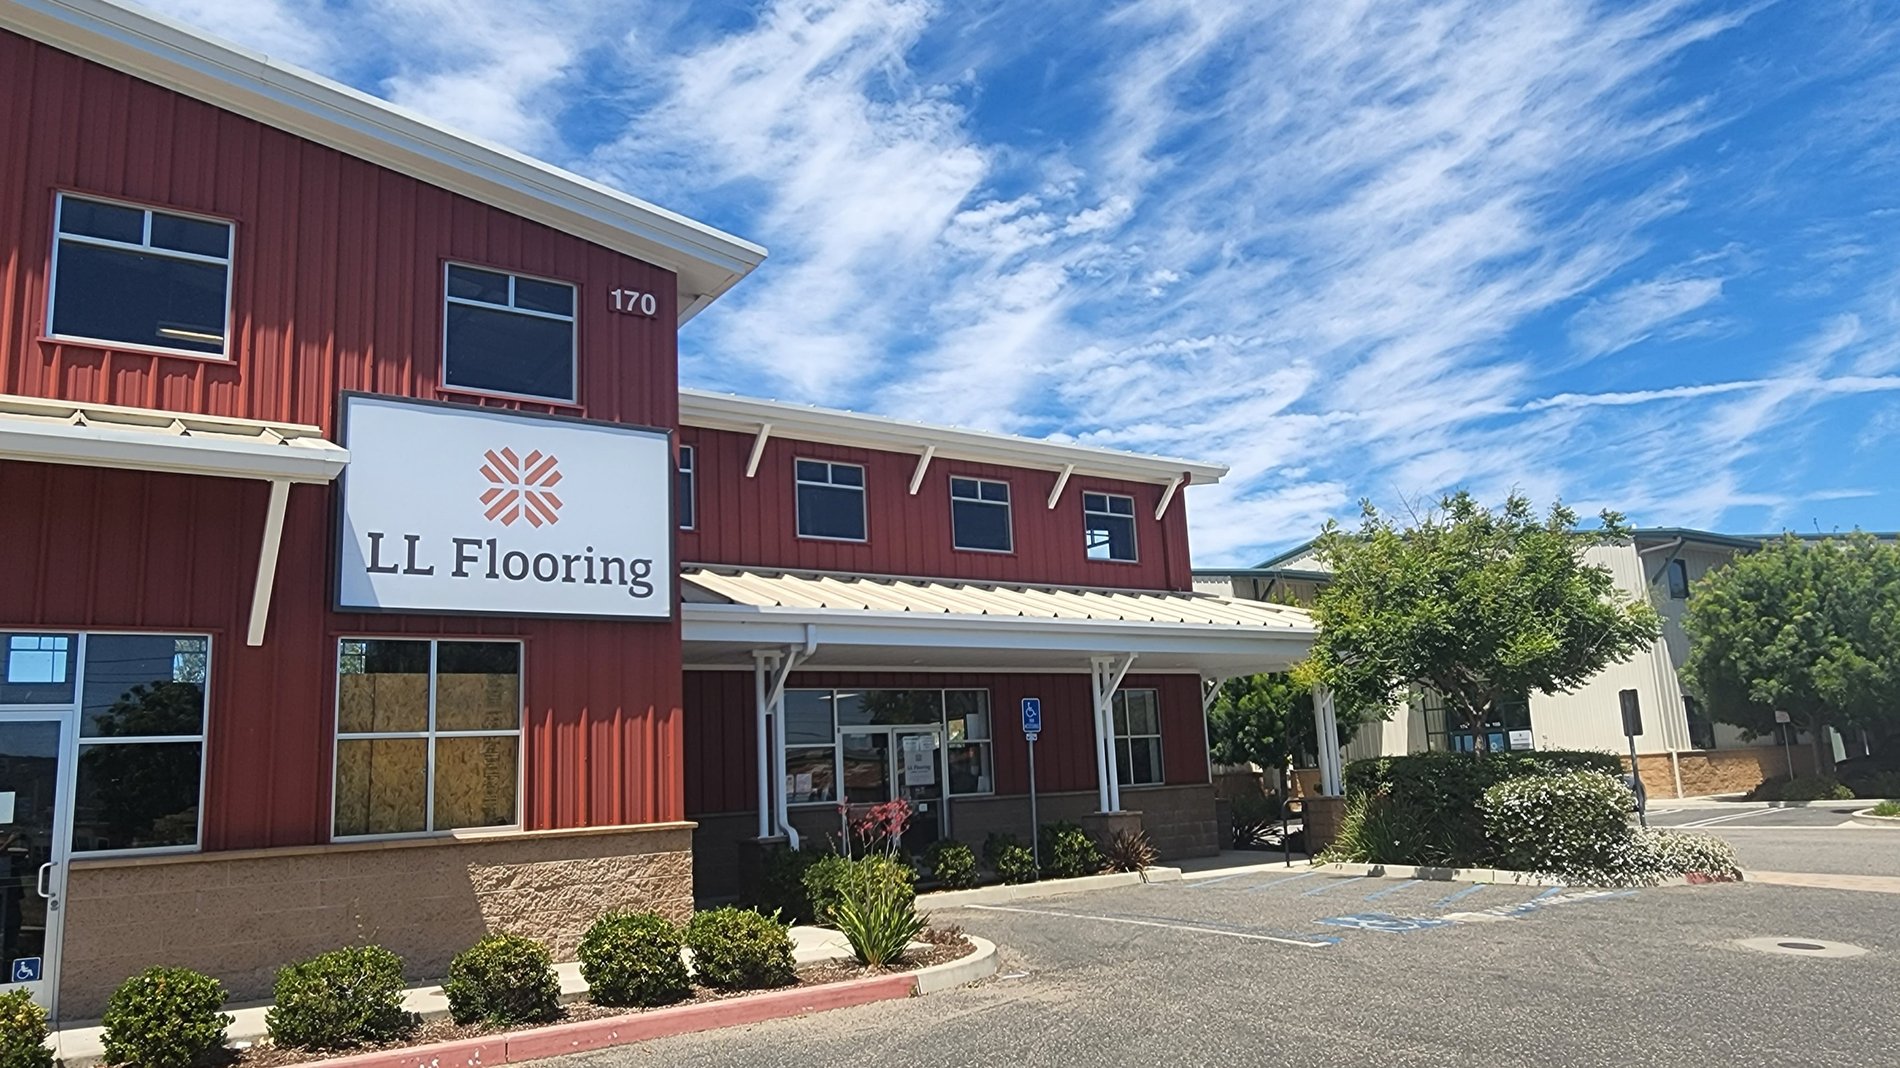 LL Flooring #1194 San Luis Obispo | 170 Suburban Road | Storefront